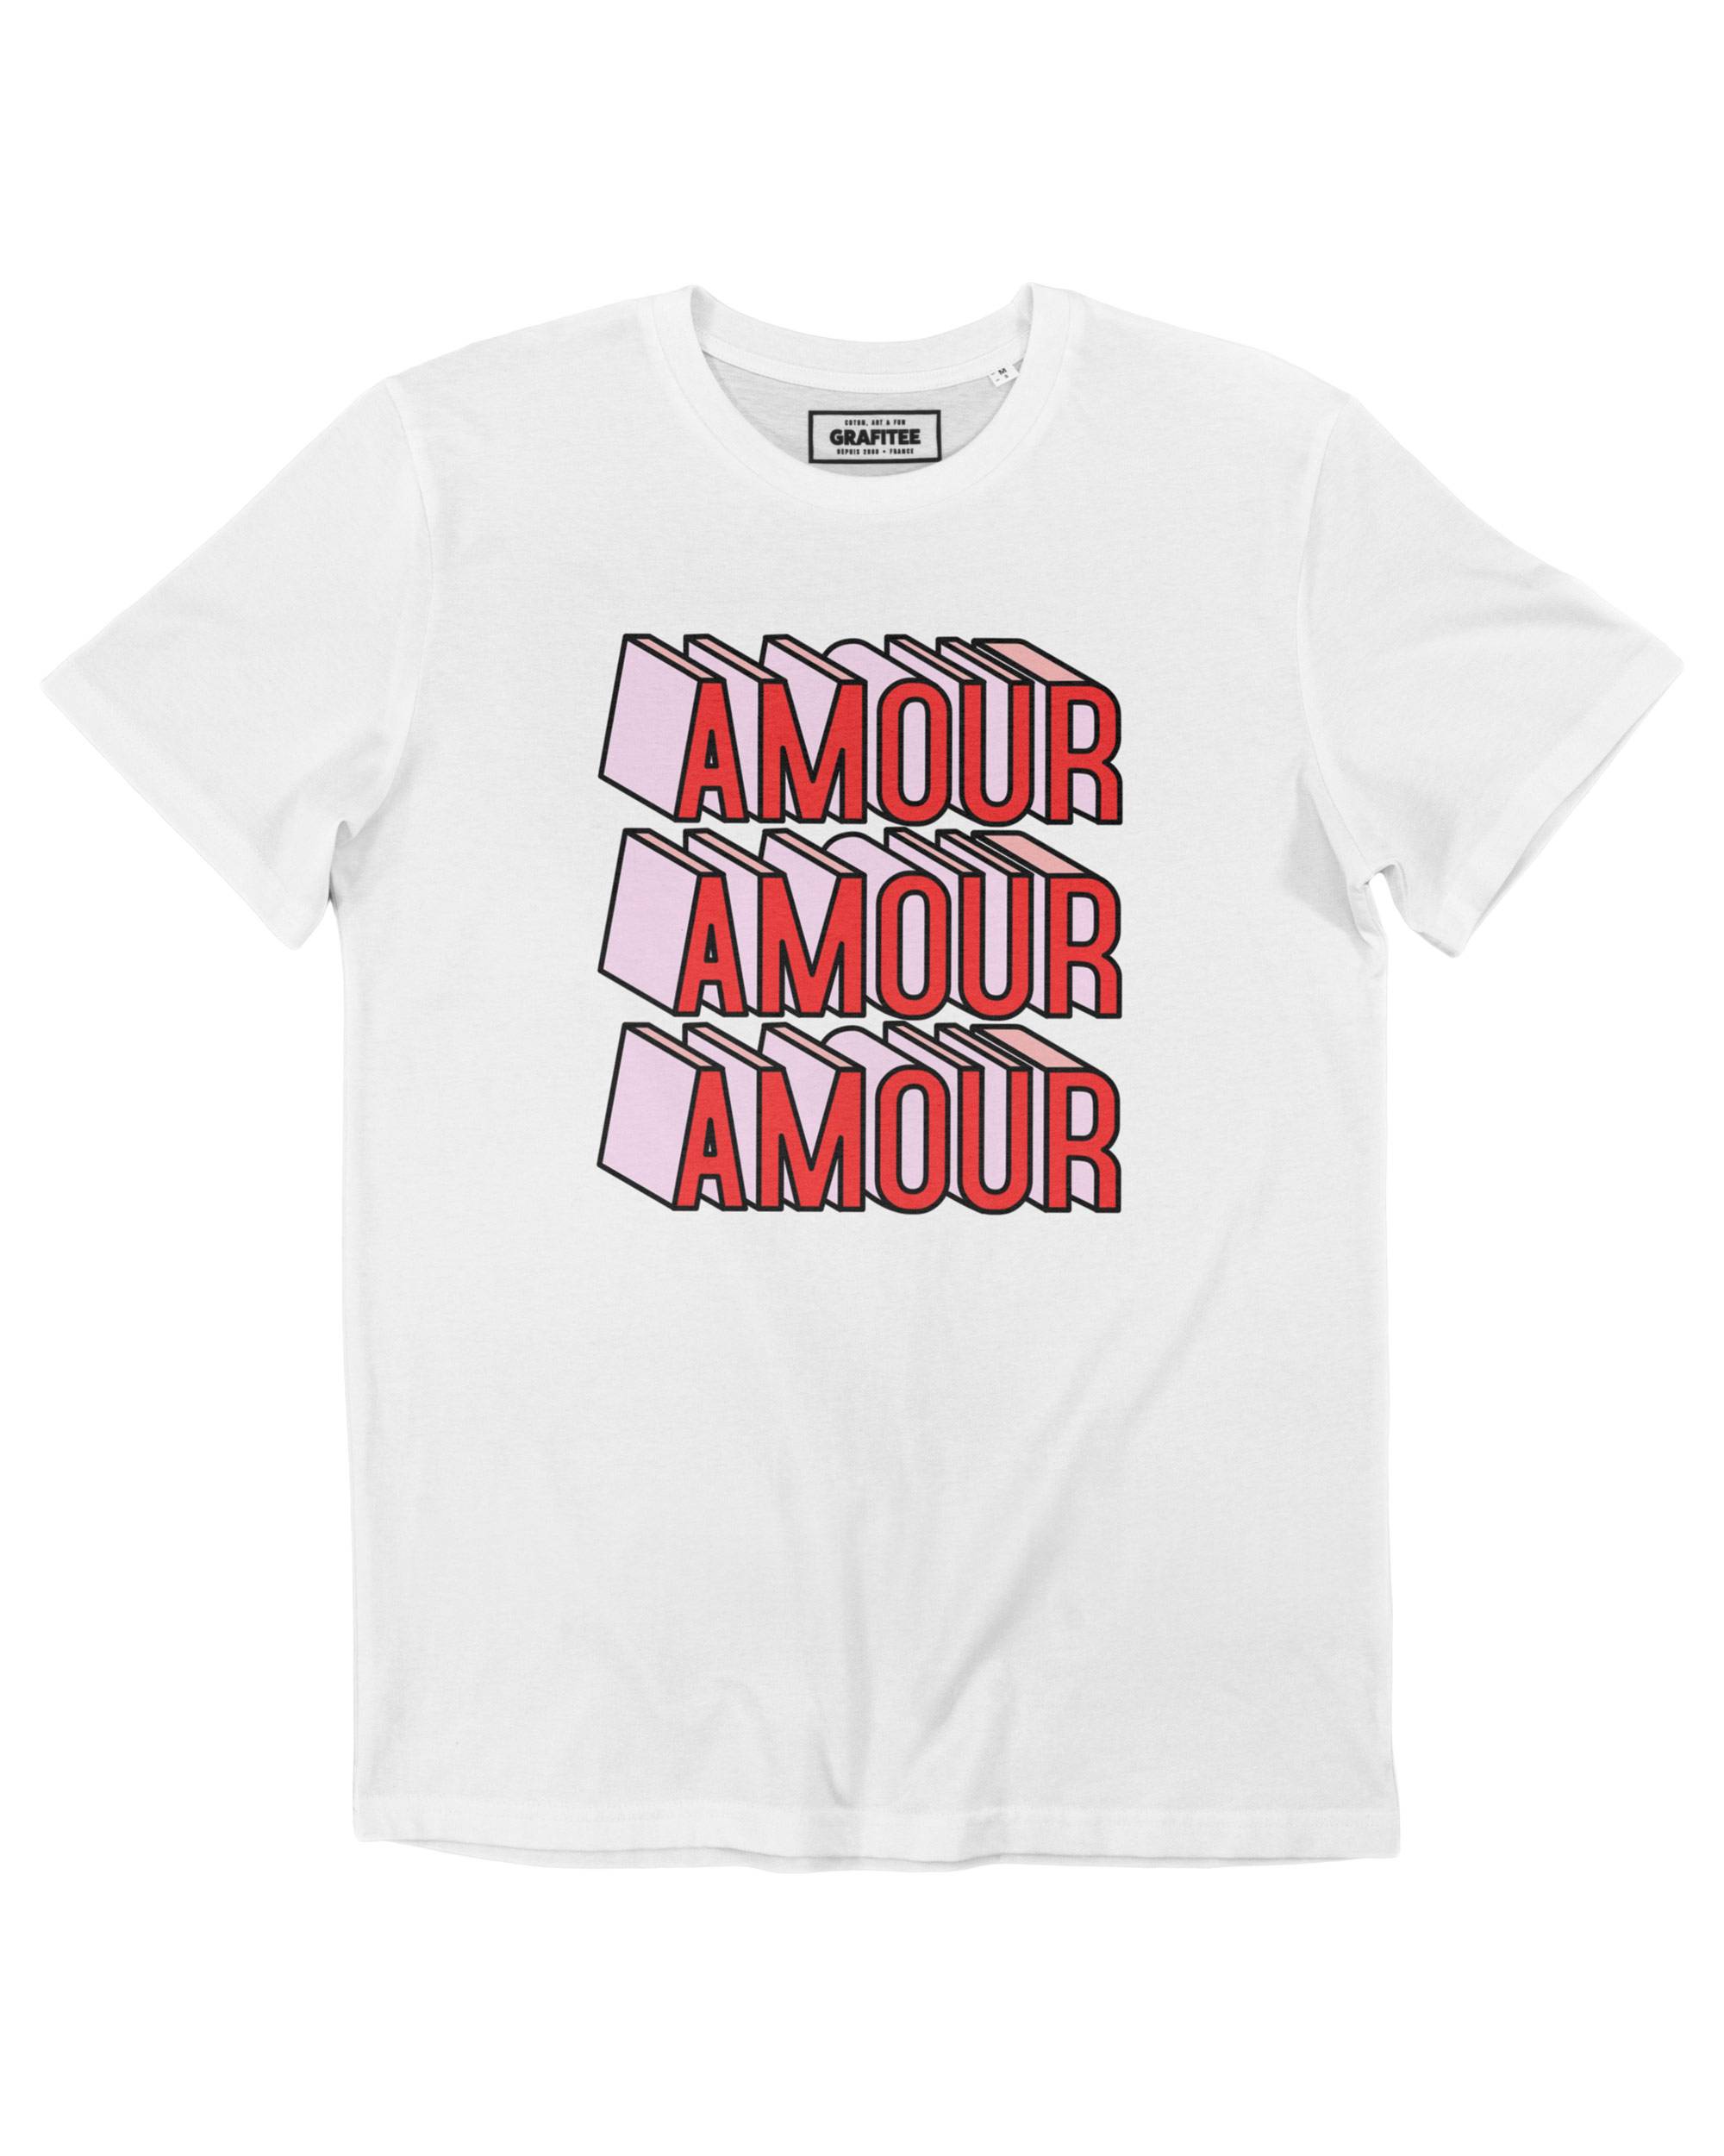 T-shirt Amour Amour Amour Grafitee